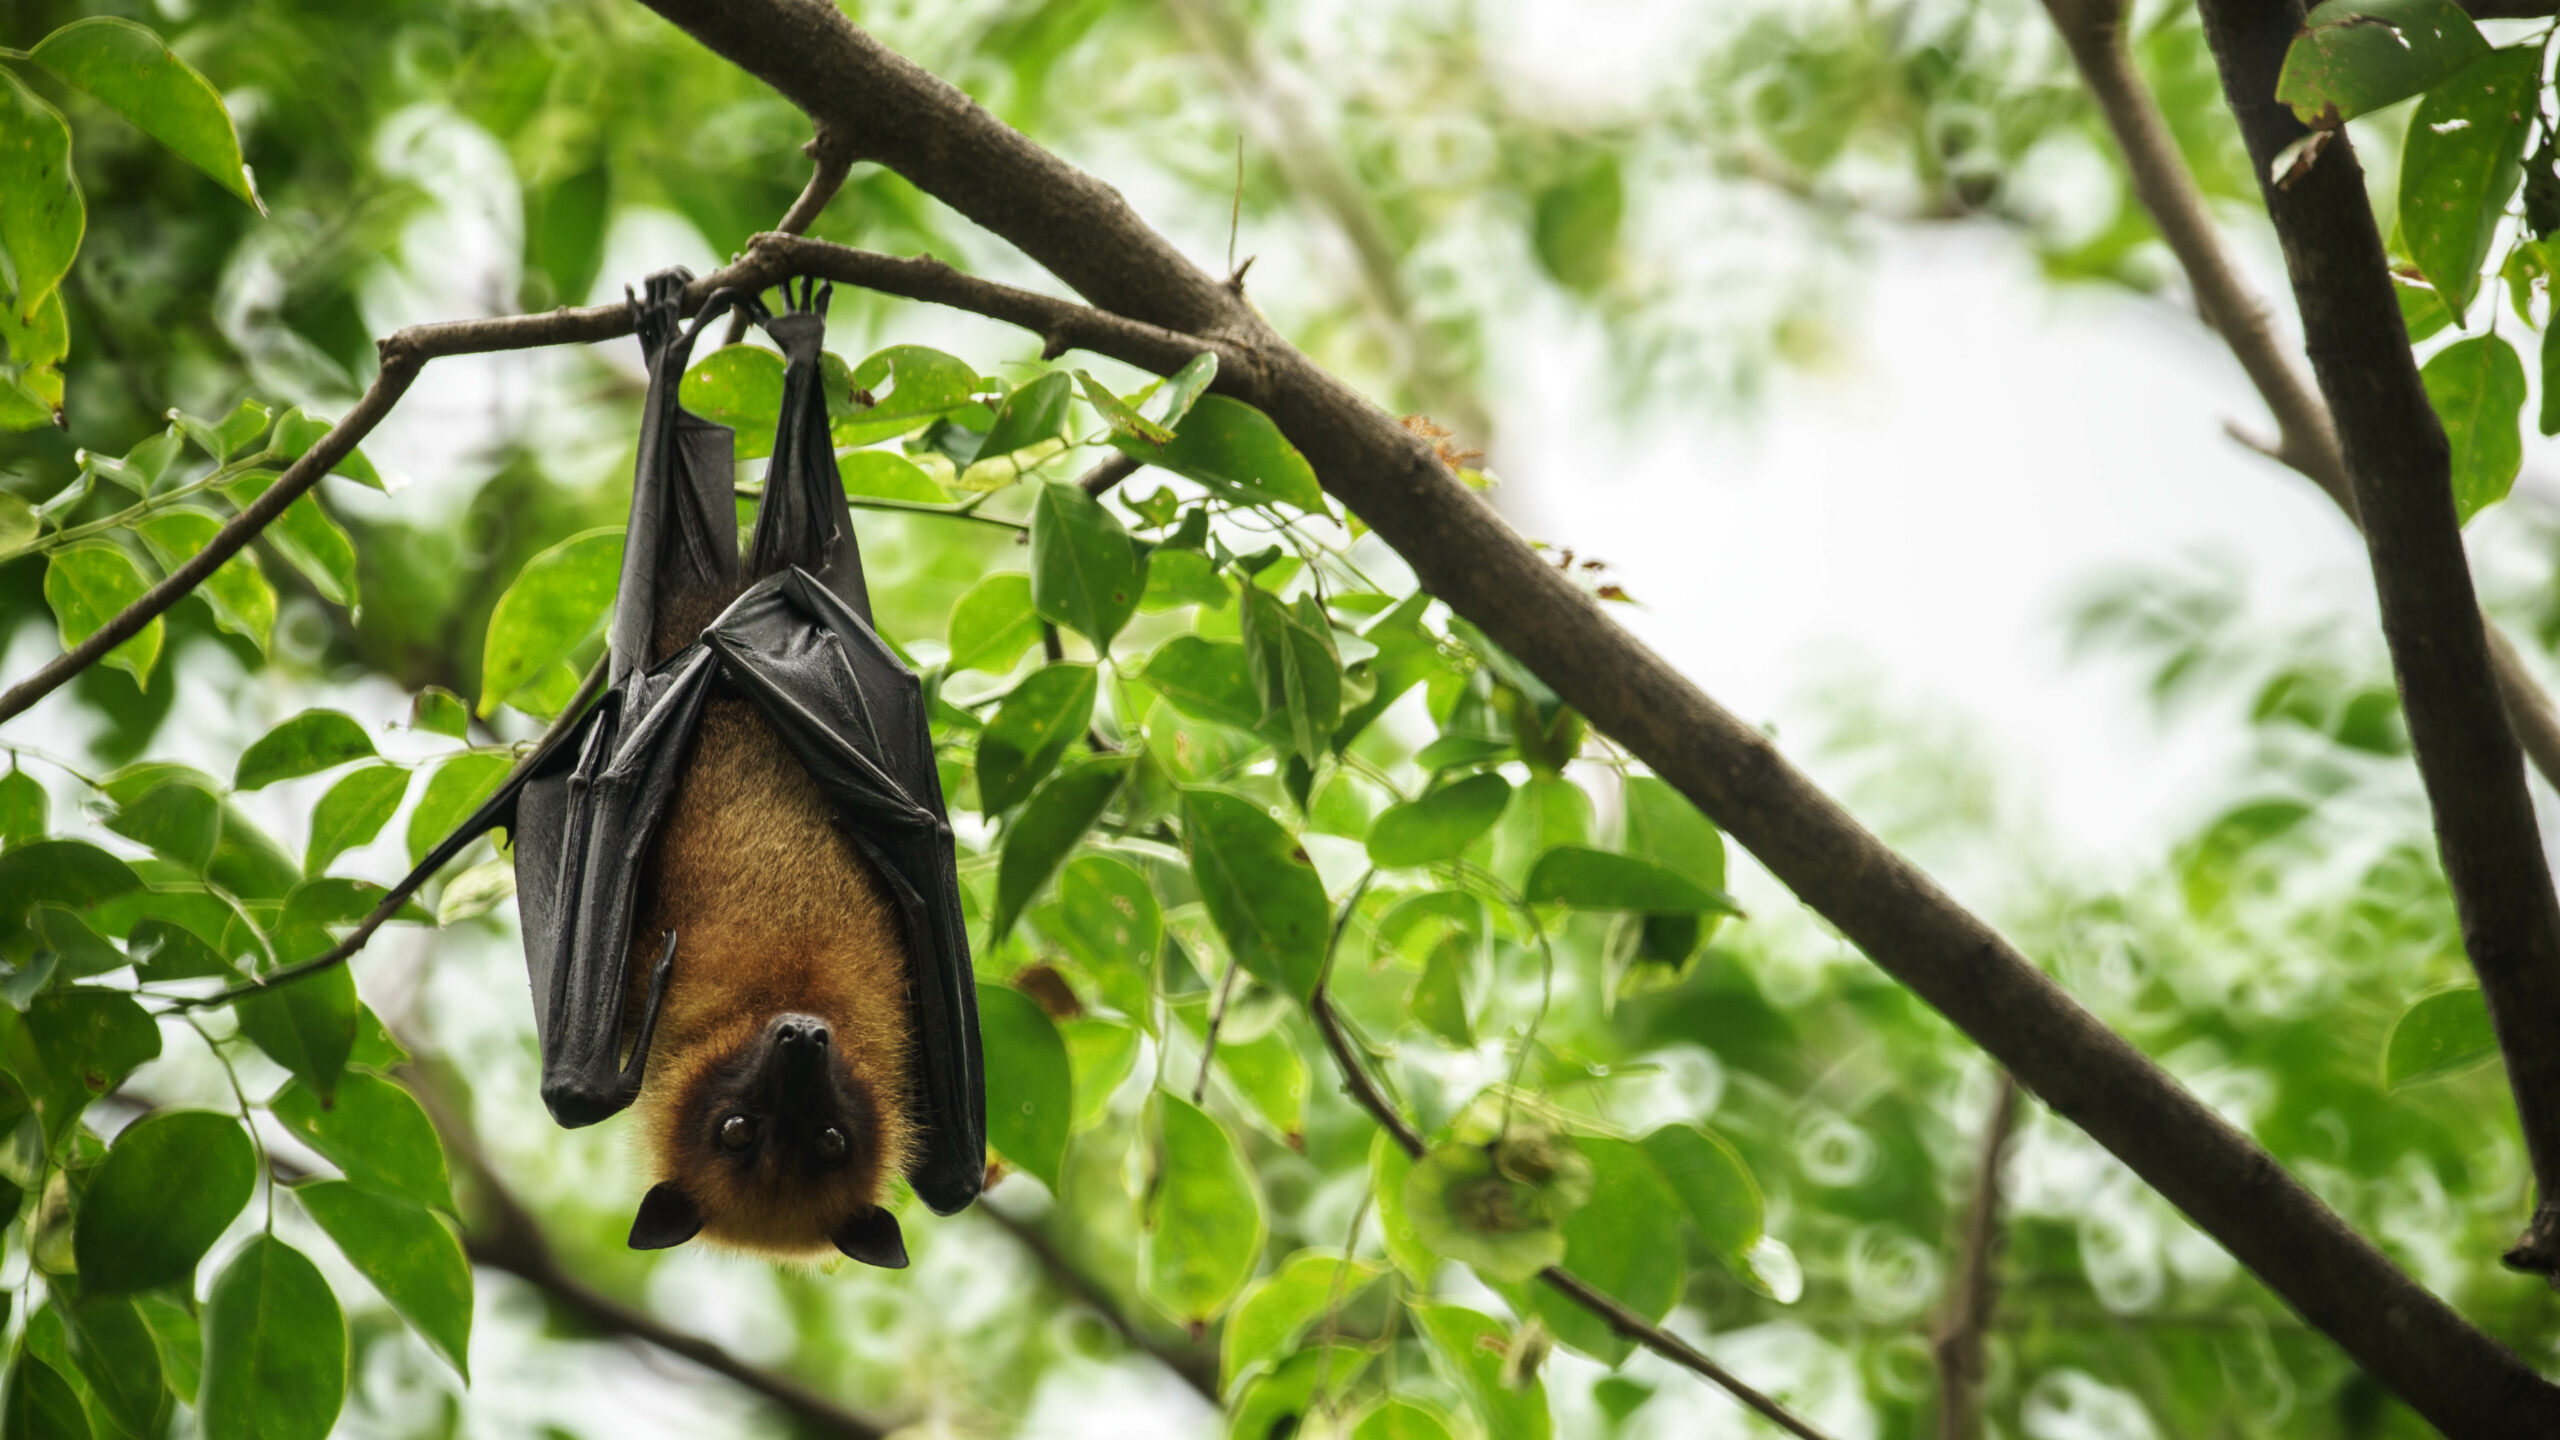 Bat hanging upside down on the tree.